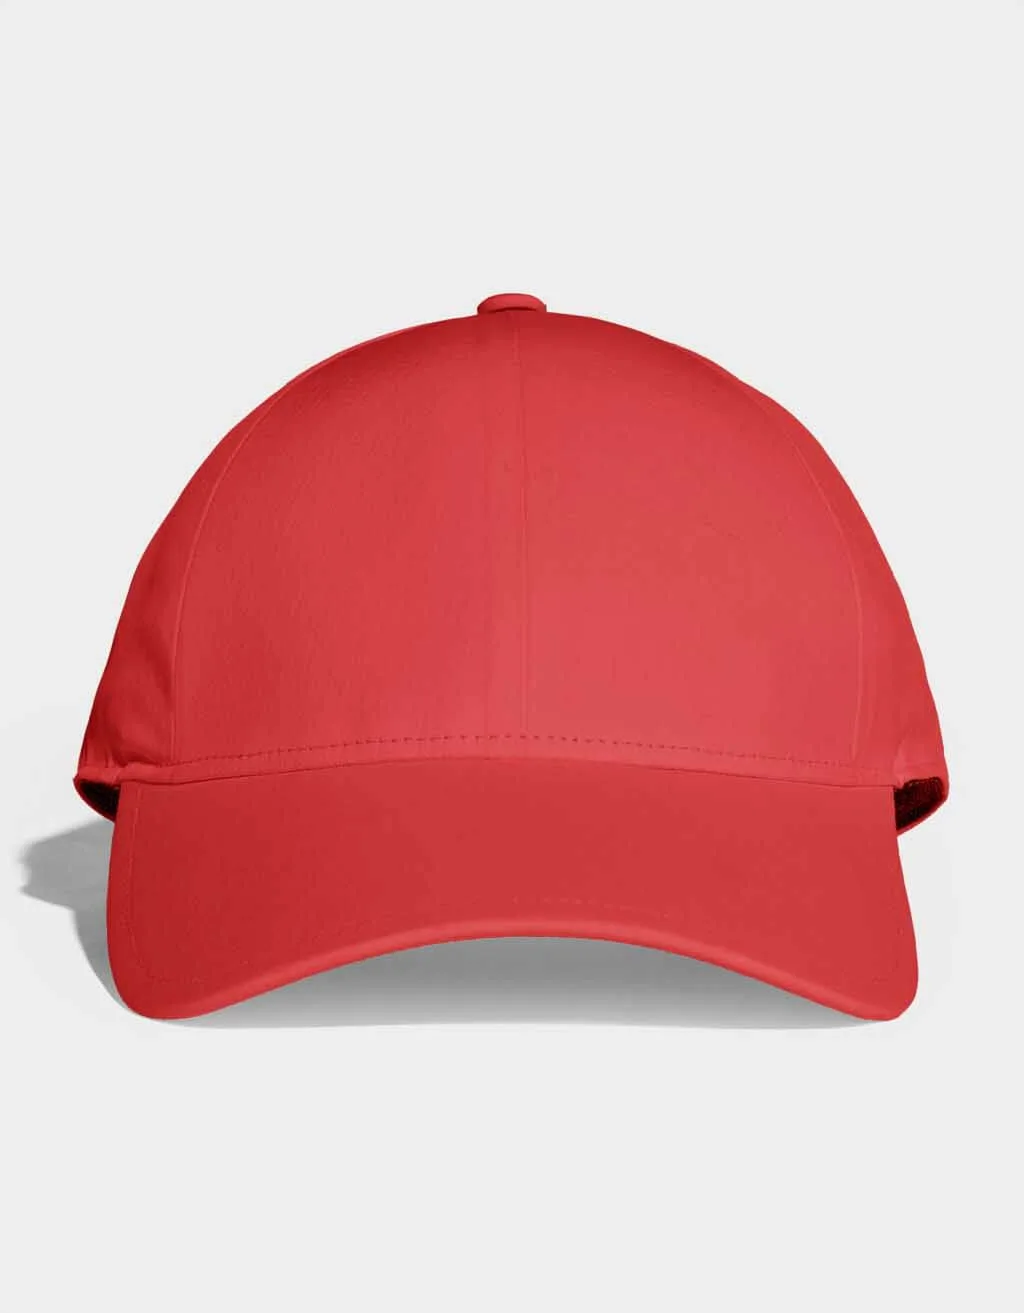 buy plain red cap for men online india